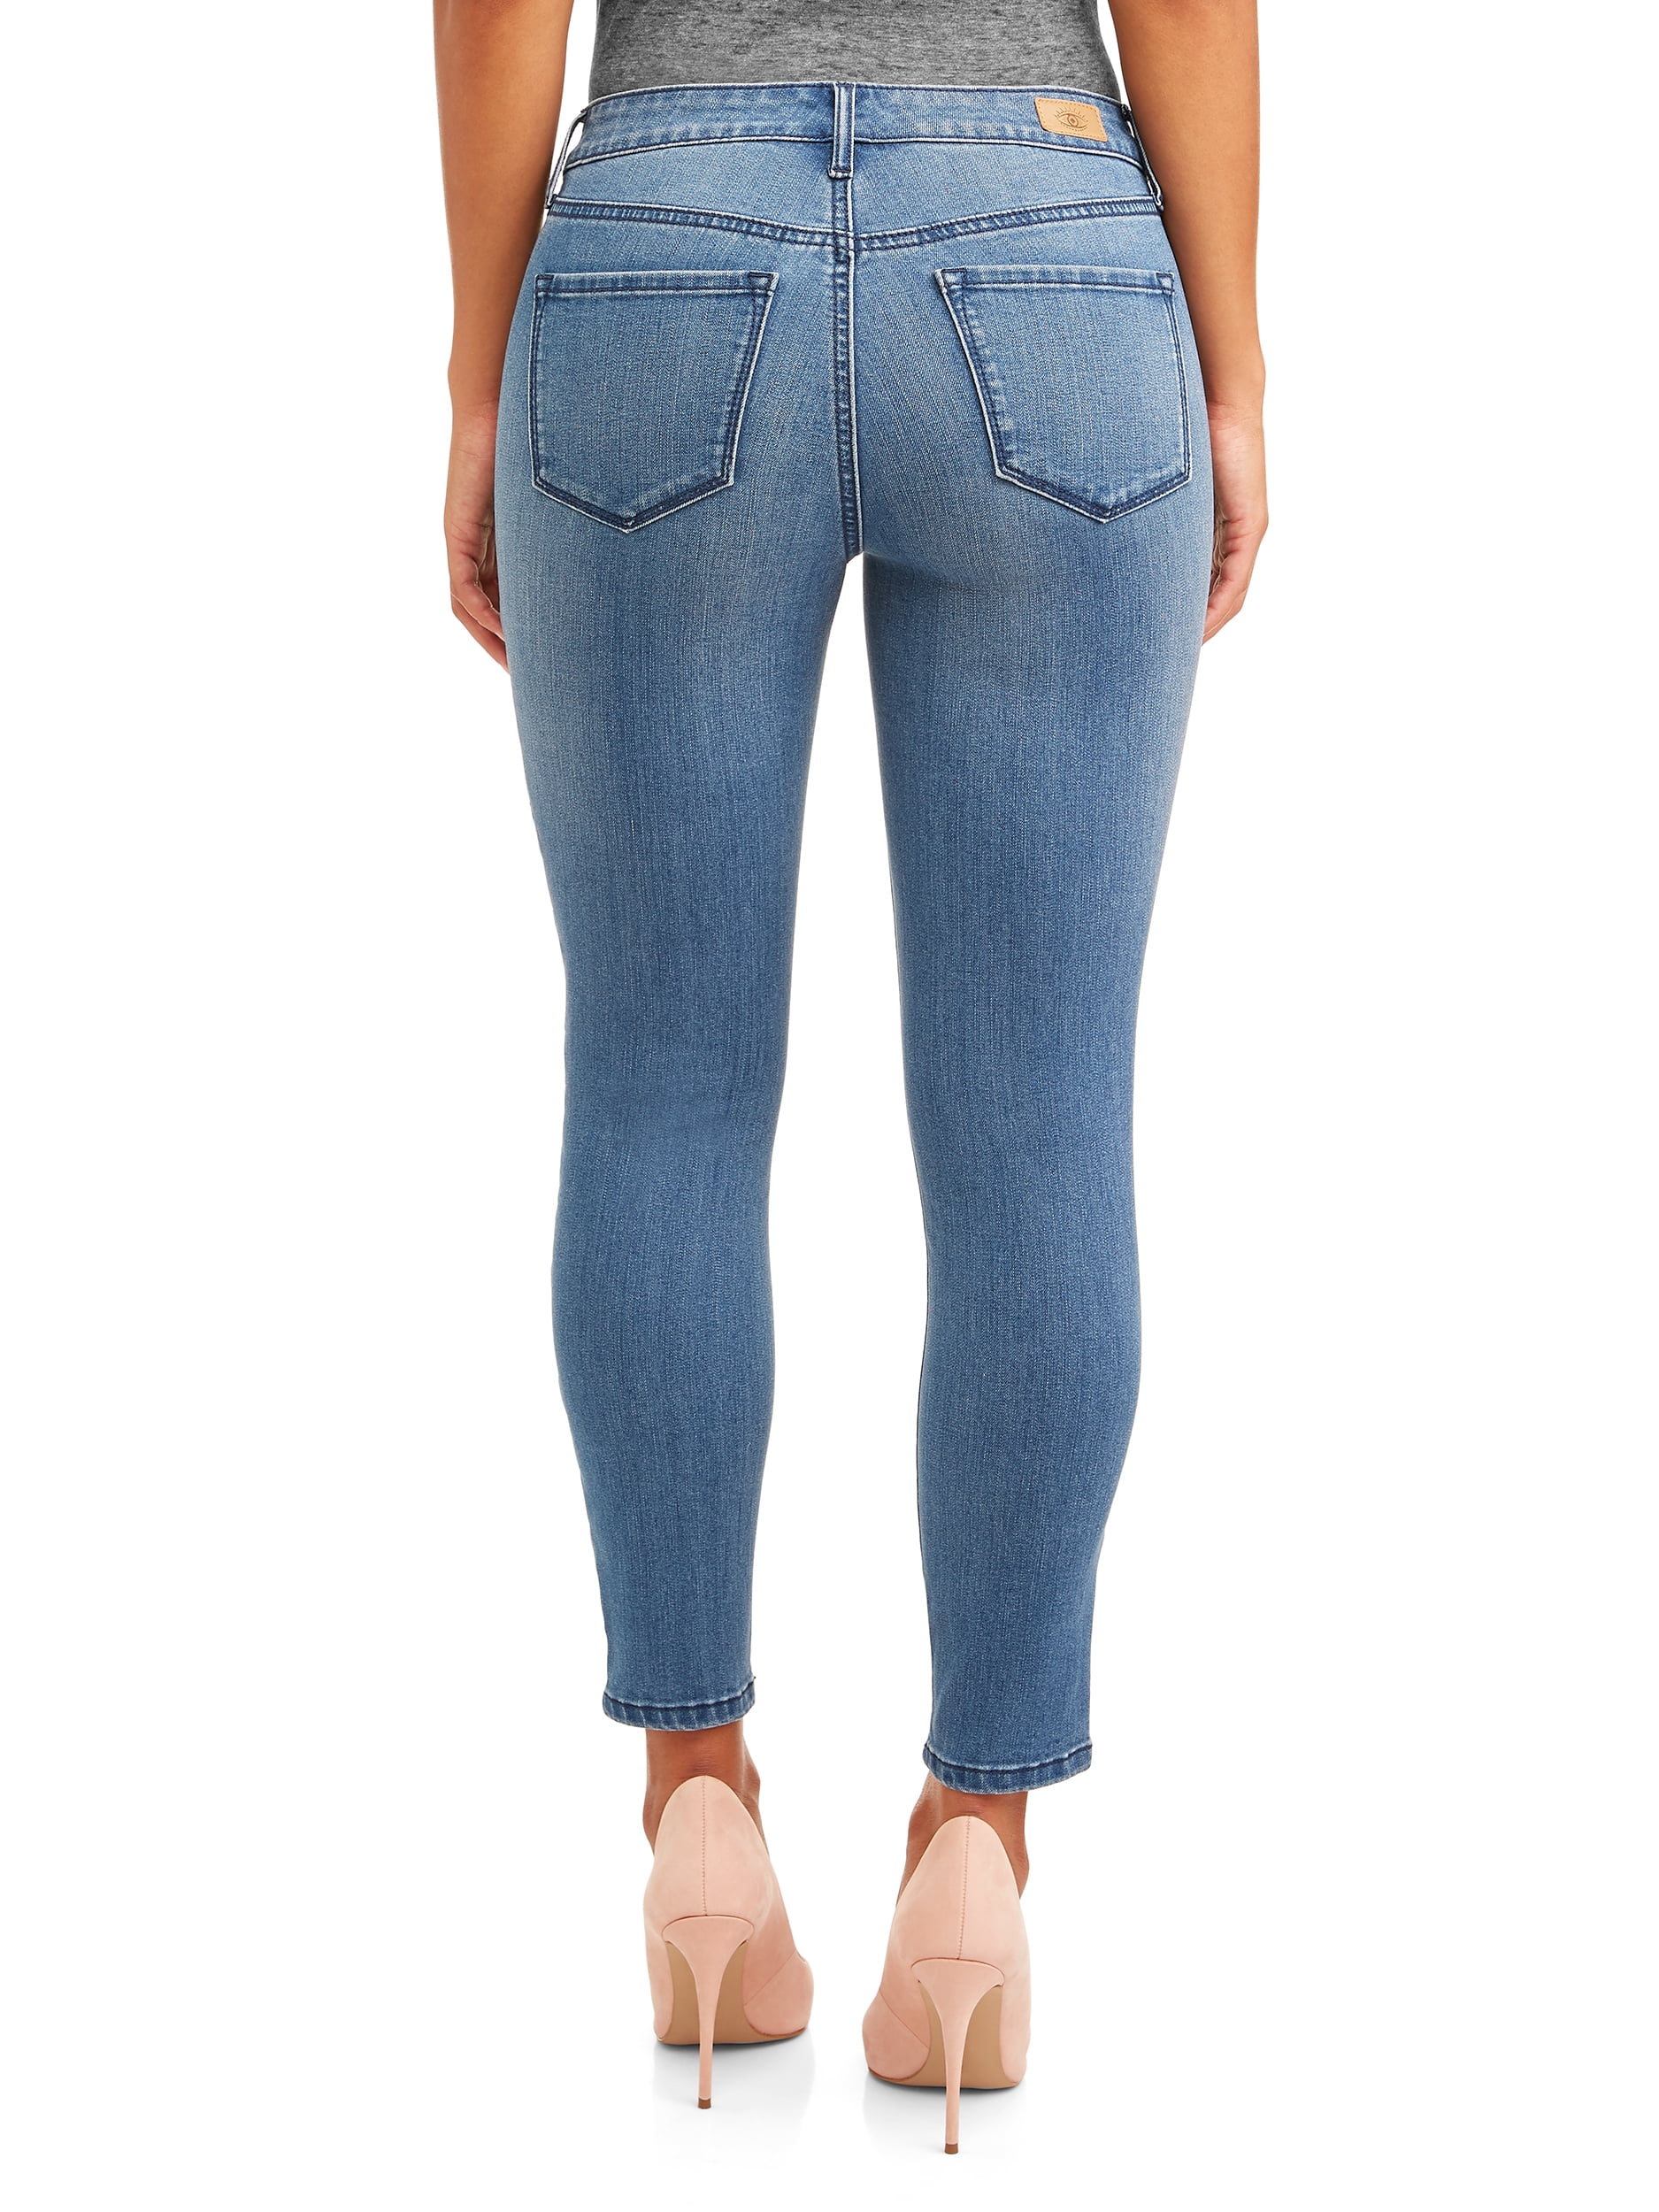 Sofia Vergara Models Her Walmart Skinny Jeans With Cherry Red Heels